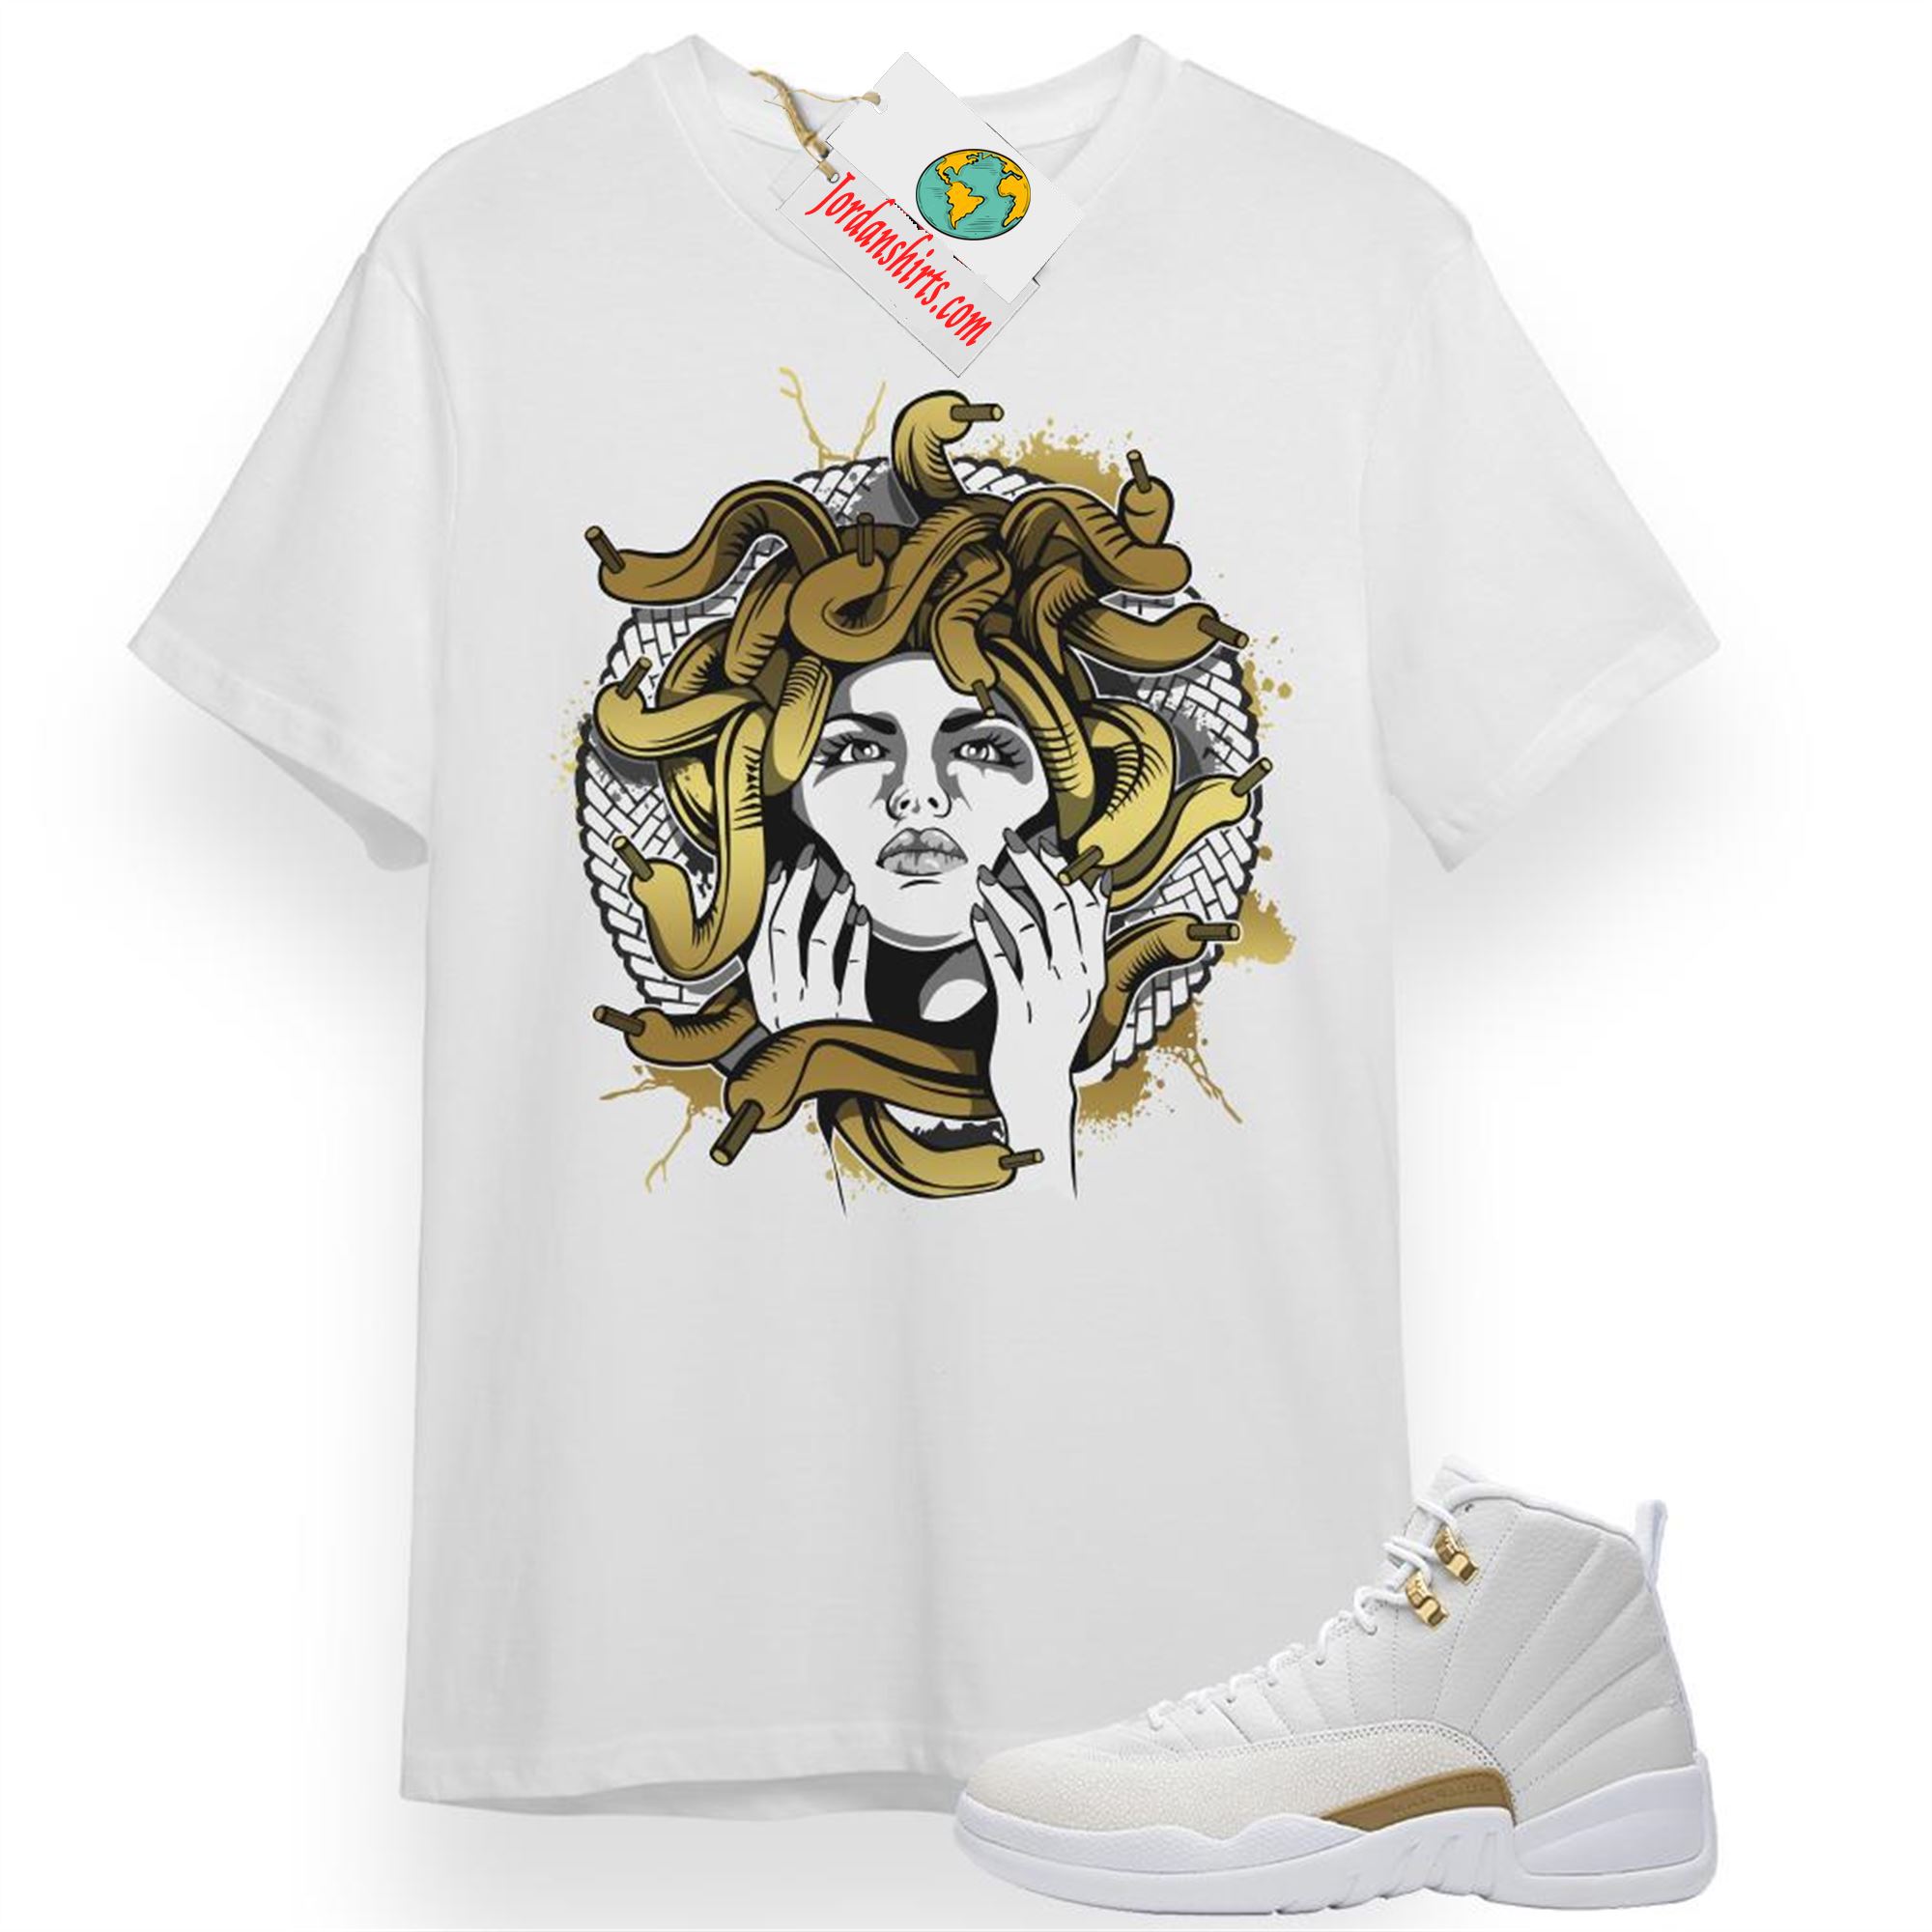 Jordan 12 Shirt, Medusa White T-shirt Air Jordan 12 Ovo 12s Plus Size Up To 5xl